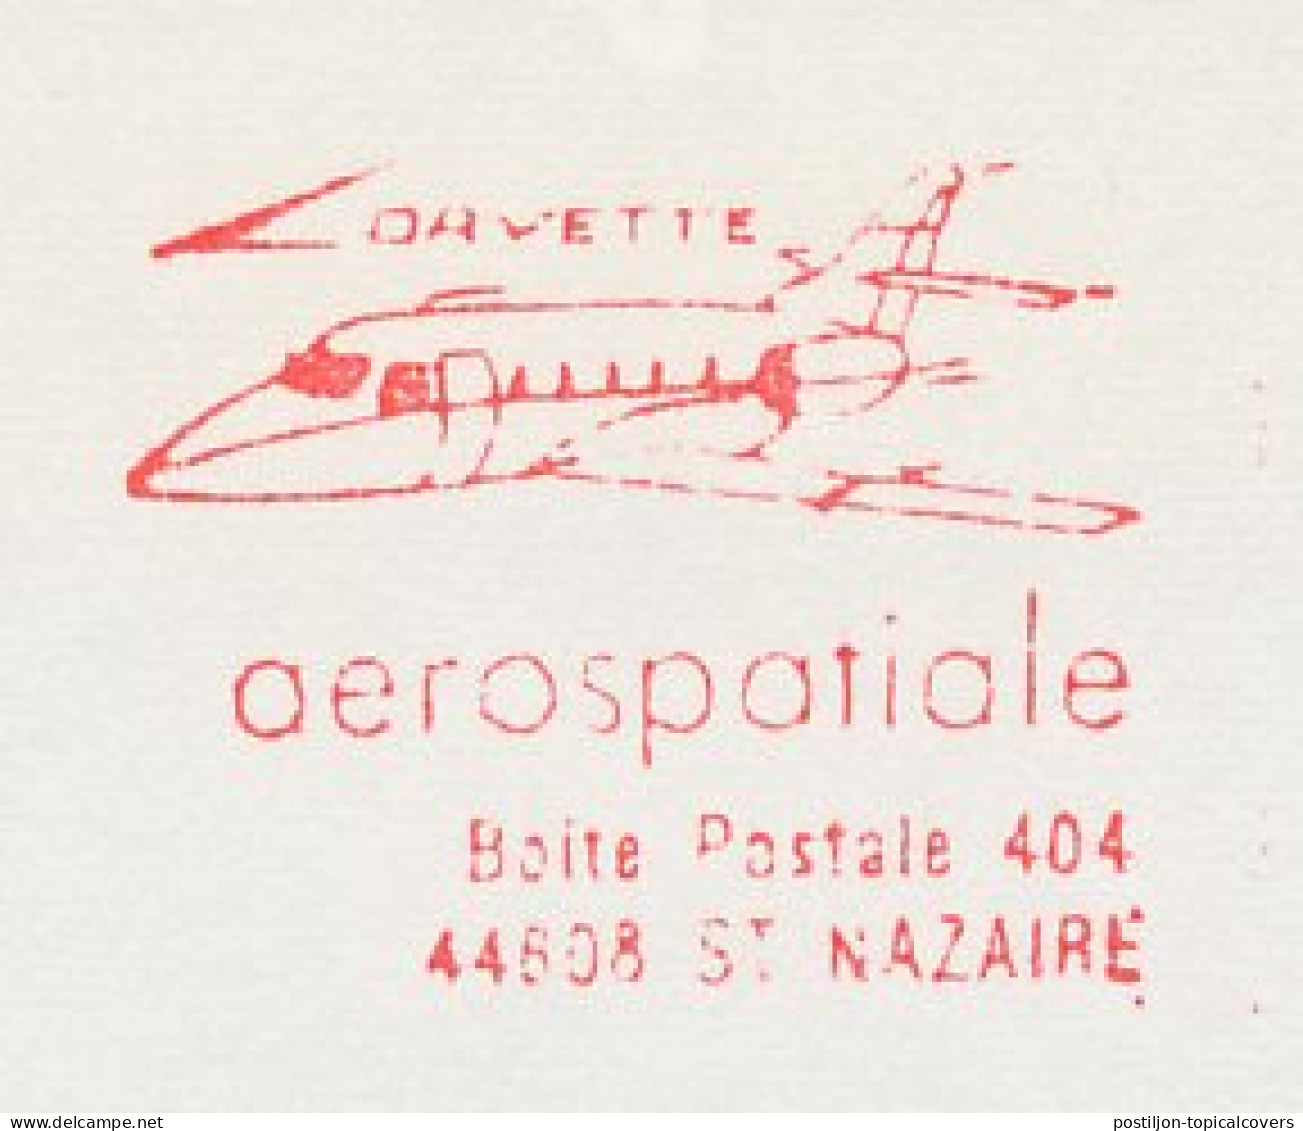 Meter Cut France 1984 Airplane - Aerospitale - Davette - Airplanes